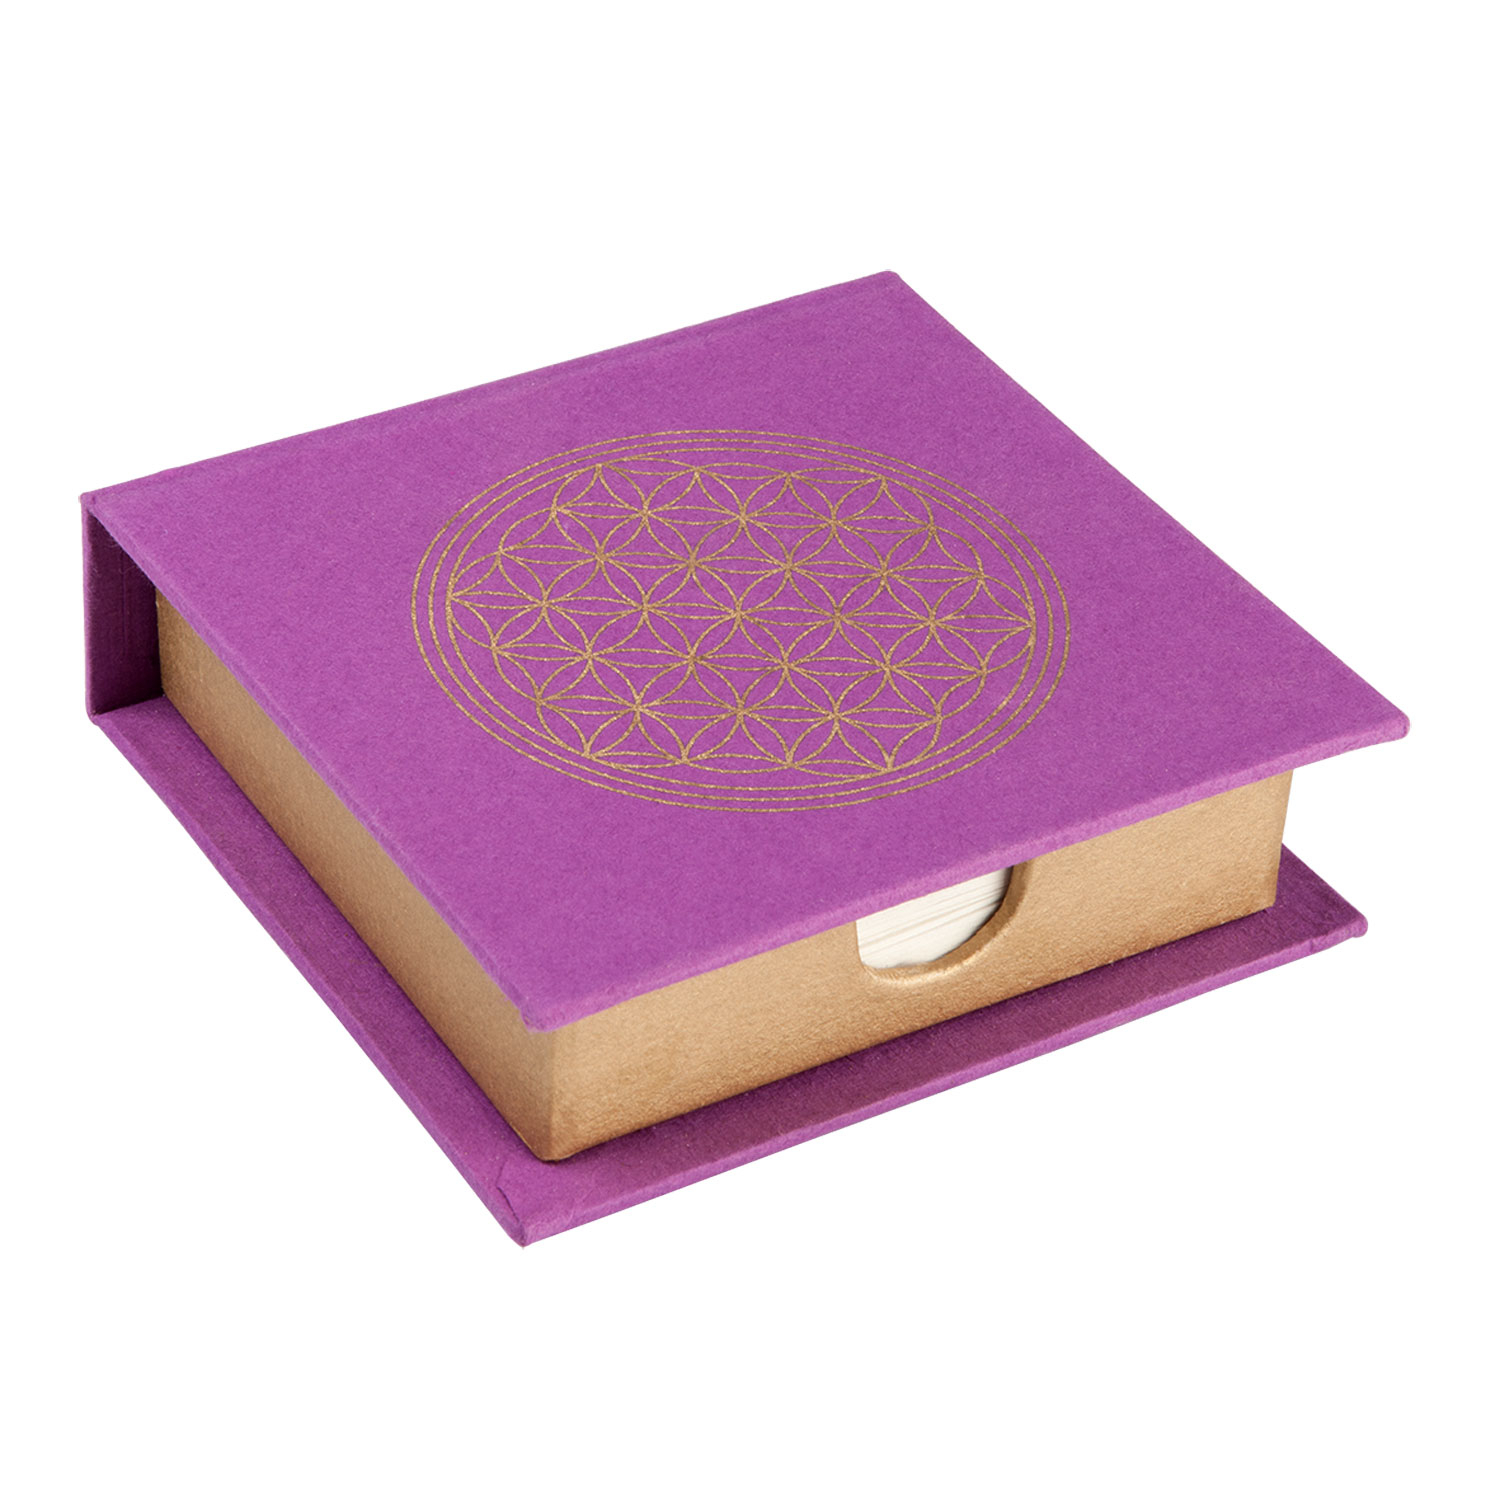 Notizzettelbox „Blume des Lebens“, Produktbild 2